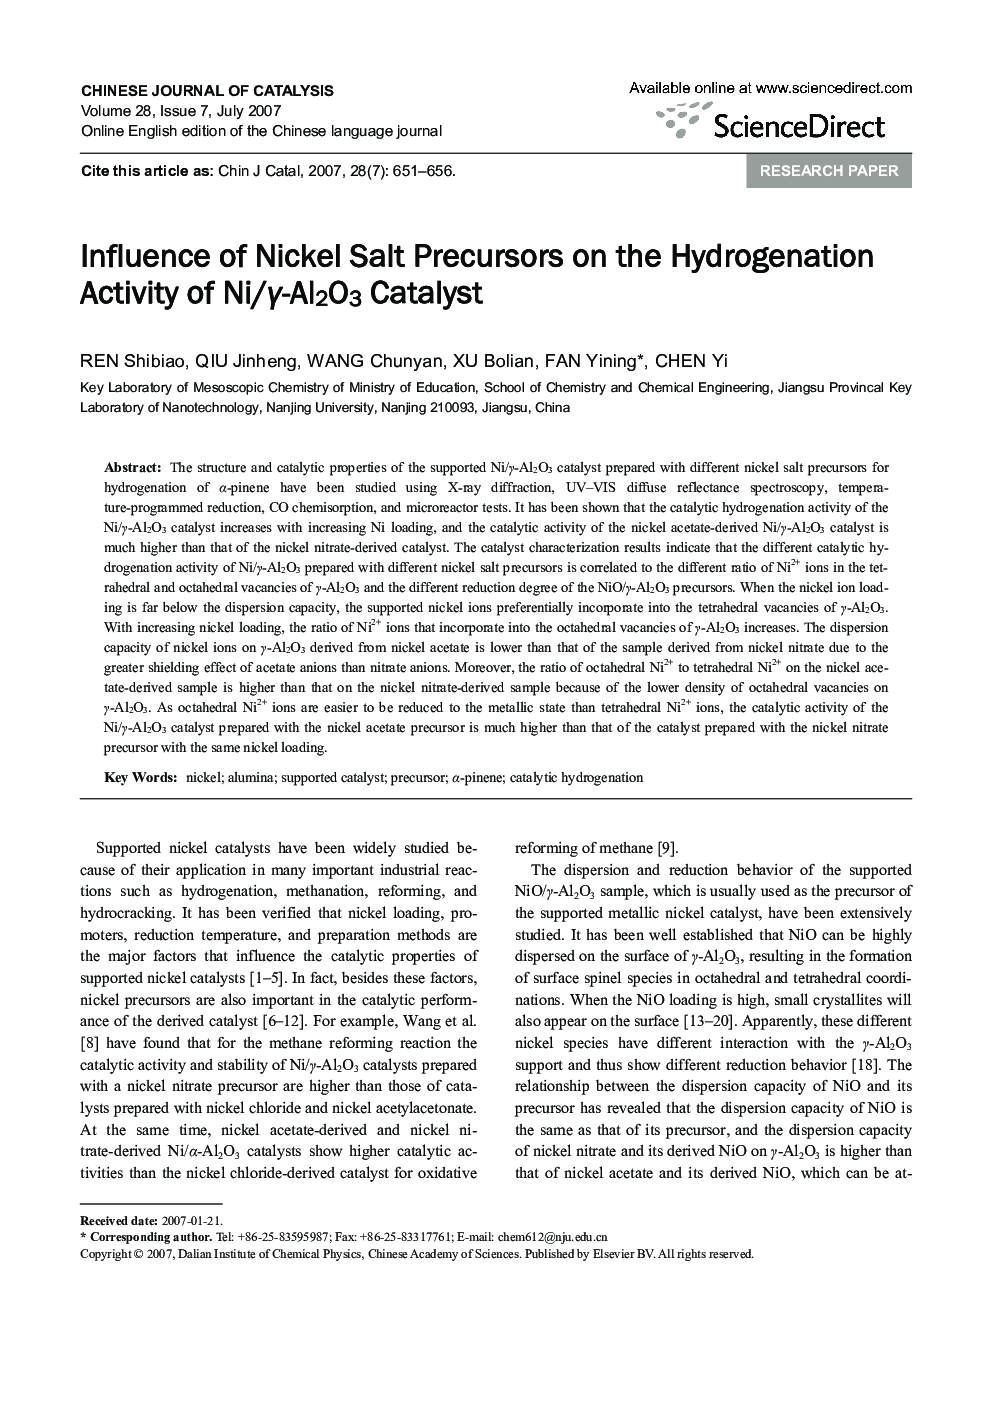 Influence of Nickel Salt Precursors on the Hydrogenation Activity of Ni/γ-Al2O3 Catalyst